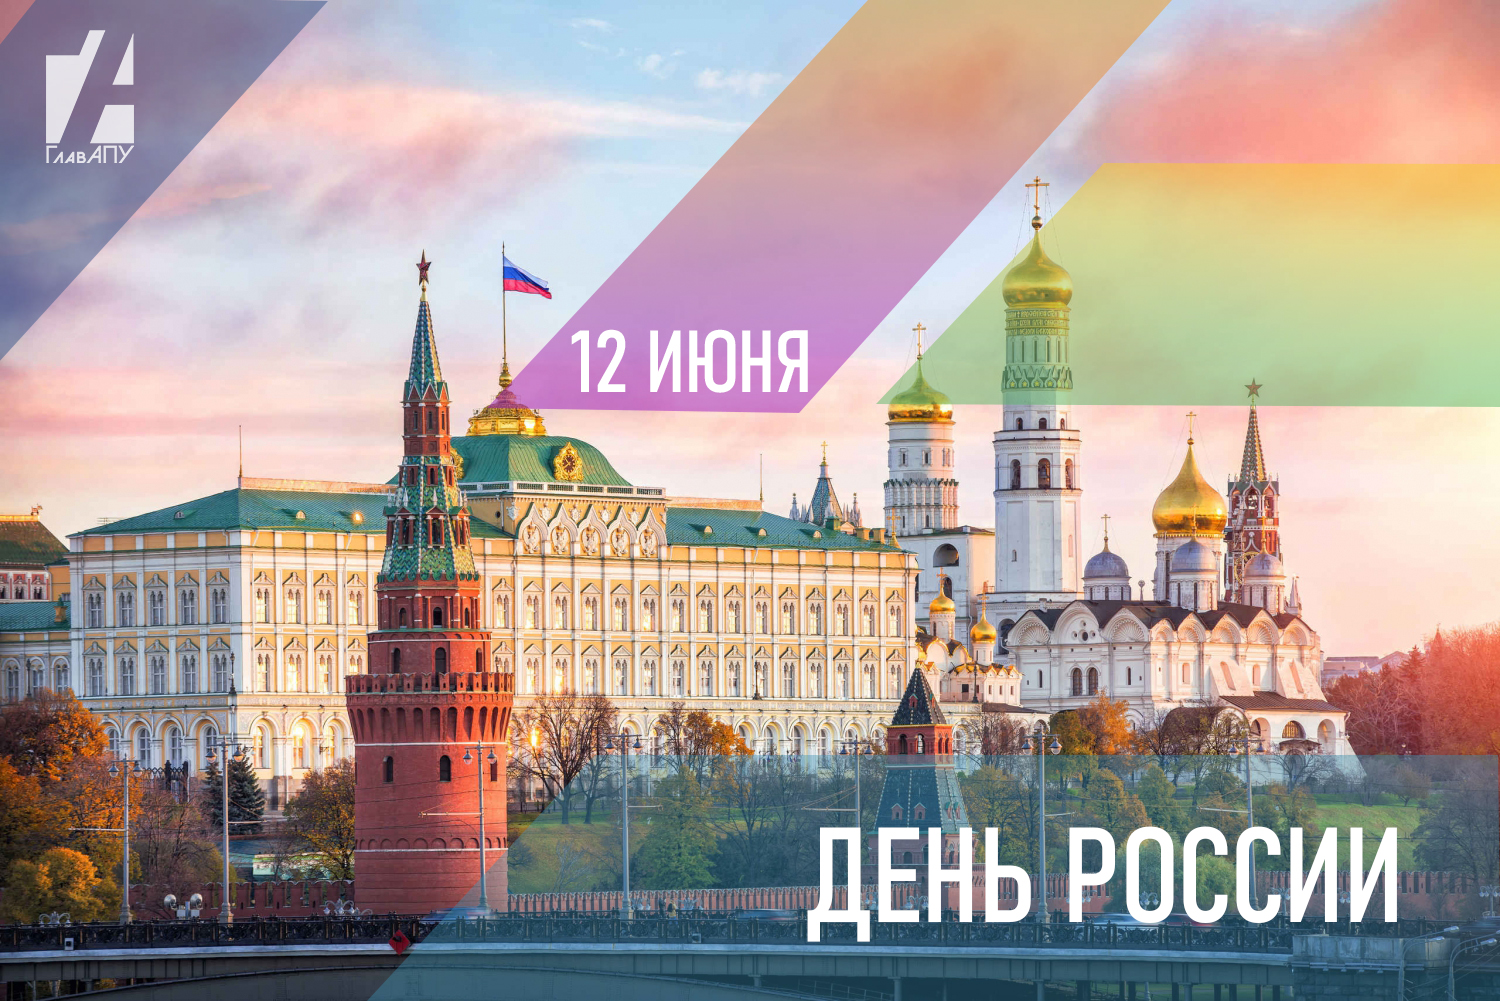 «Студия Артемия Лебедева» представила плакат ко Дню России